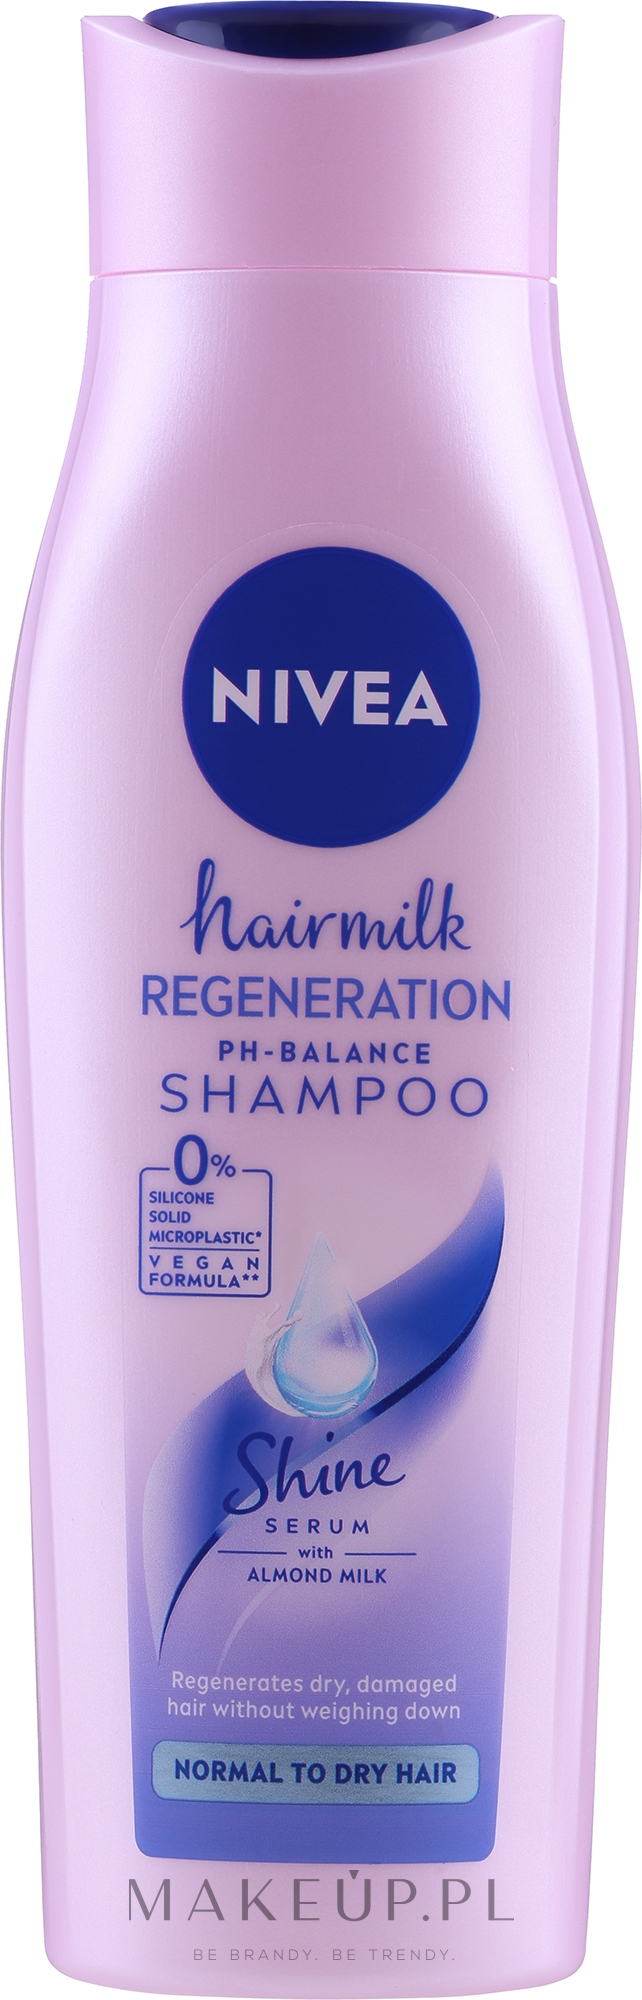 przetestuj szampon nivea